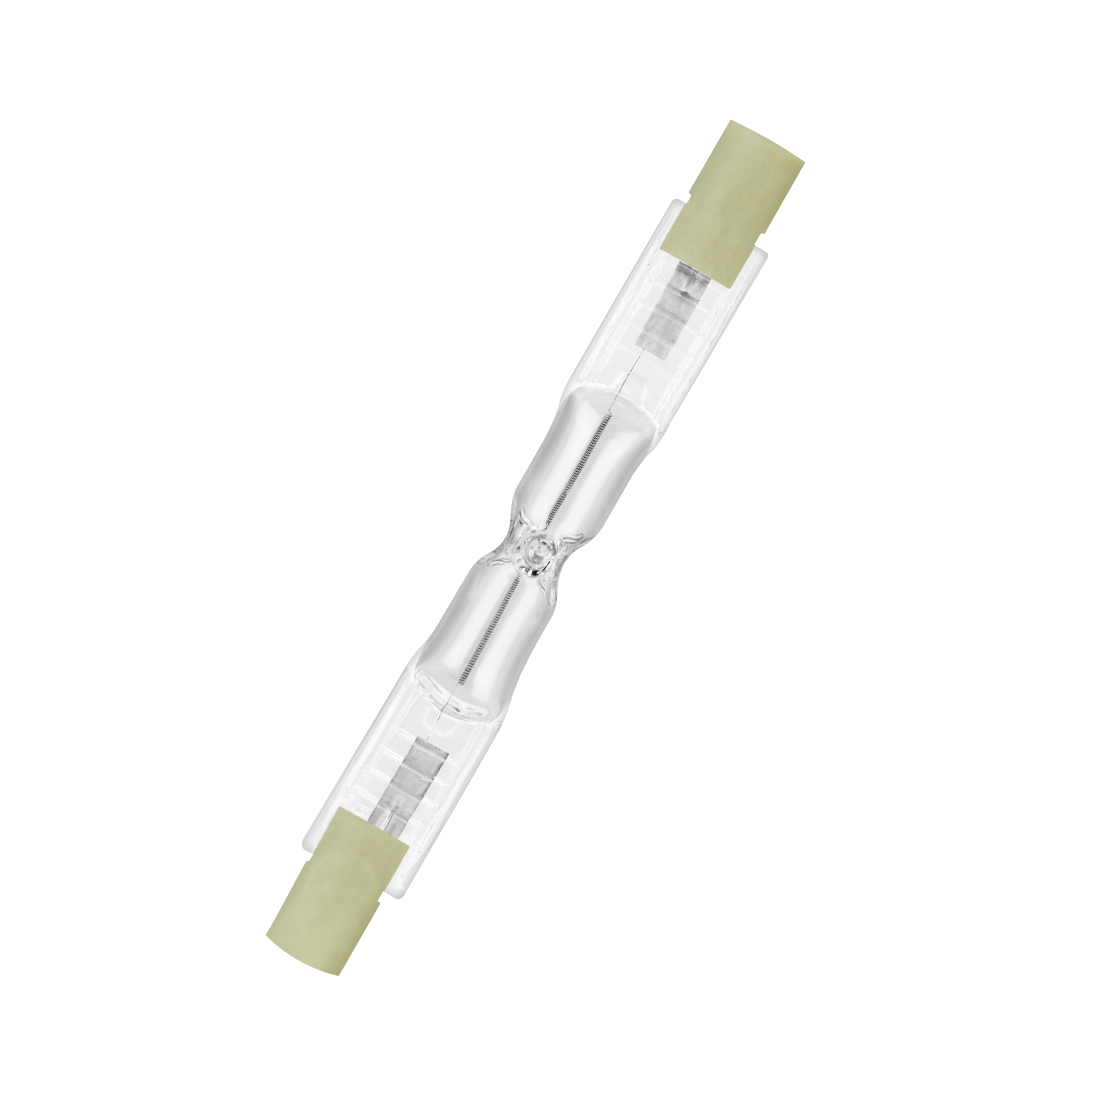 abx2 Druckfähige Abbildung 2 - Xavax, Halogen-Stablampe, R7S, 120W, 78mm, Warmweiß